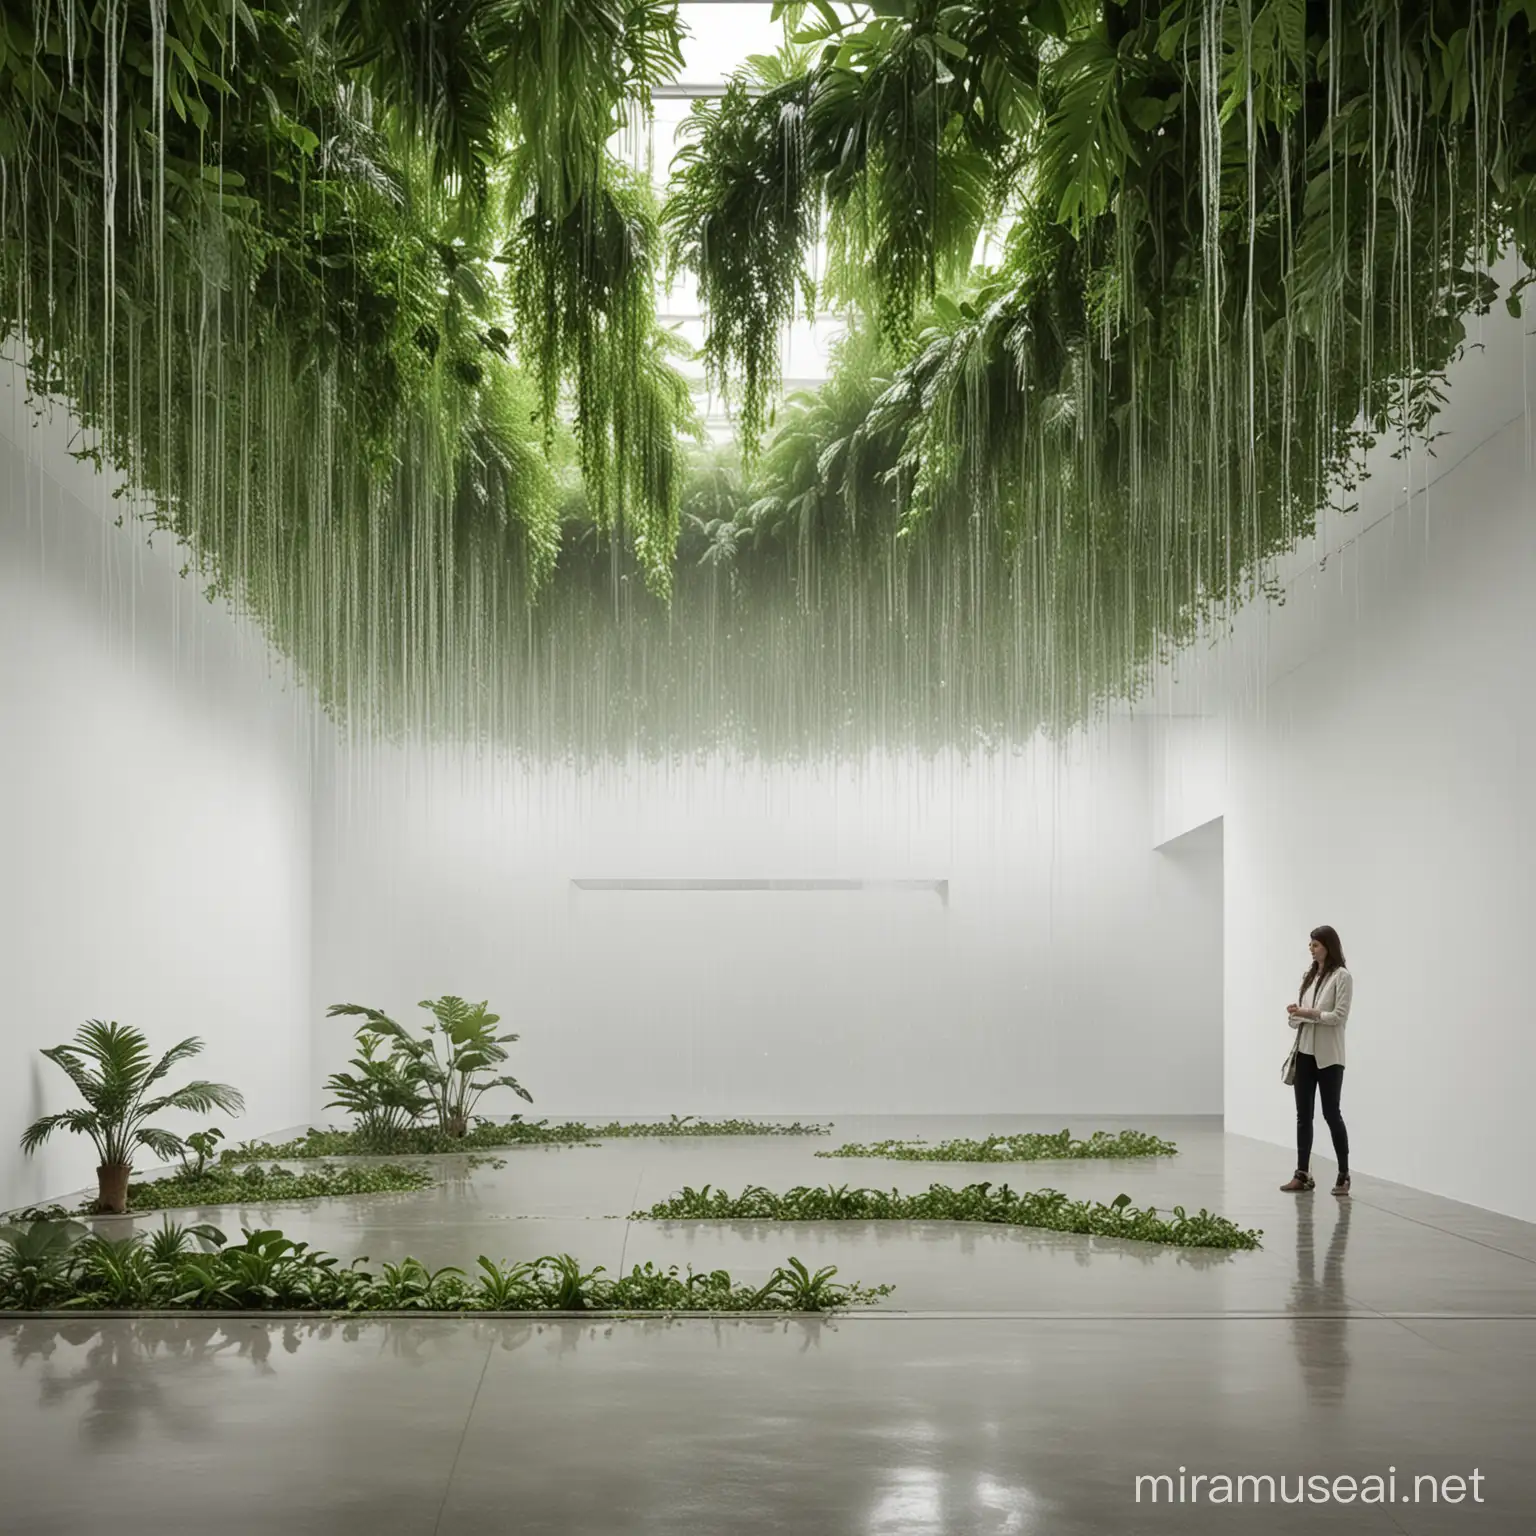 Immersive RainforestInspired Exhibition with Horizontal Rain Installation